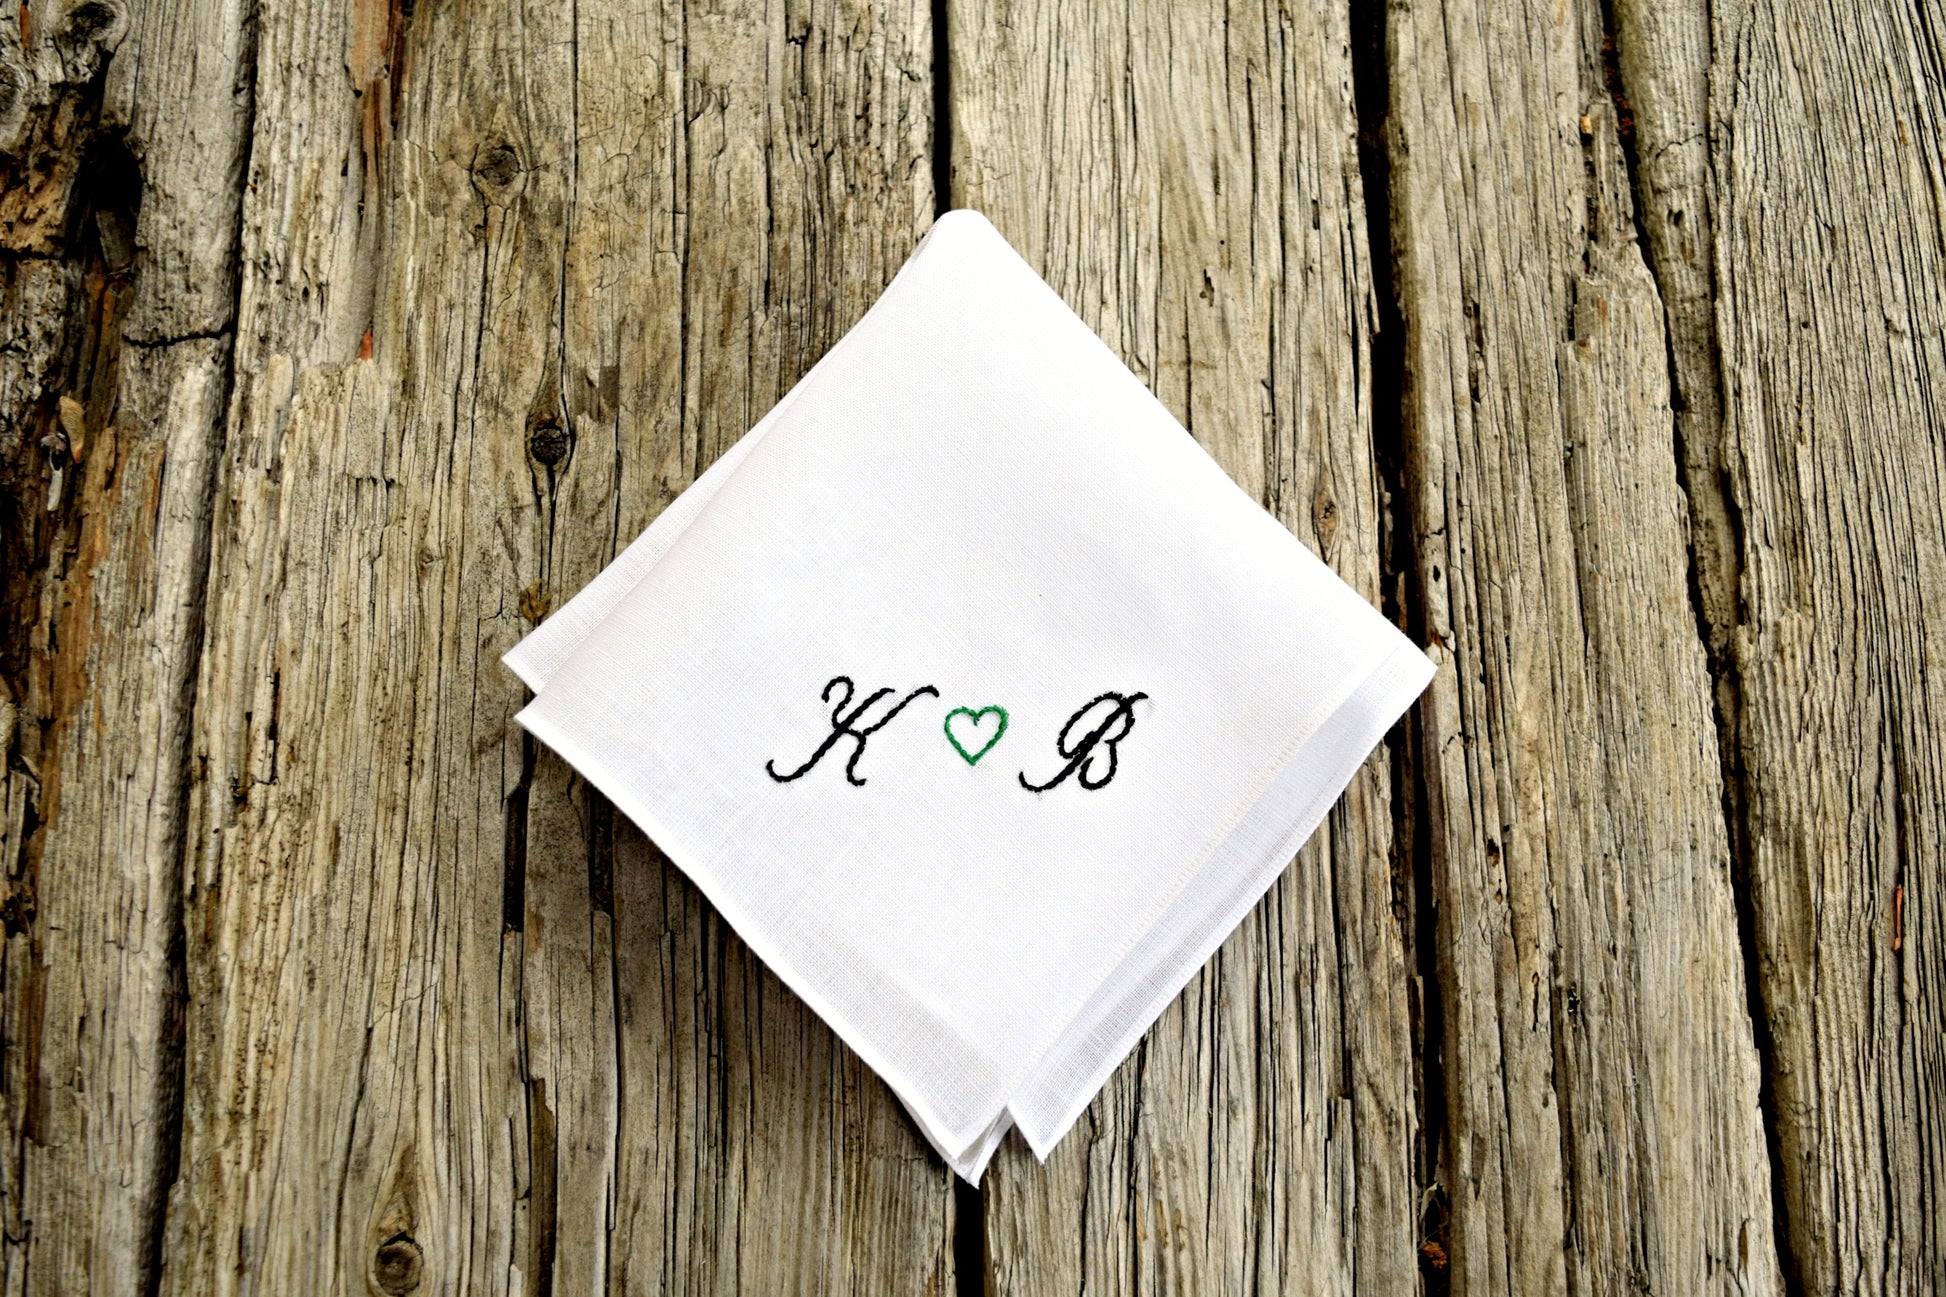 White Irish linen handkerchief embroidered ' K (heart) B ' in black and green